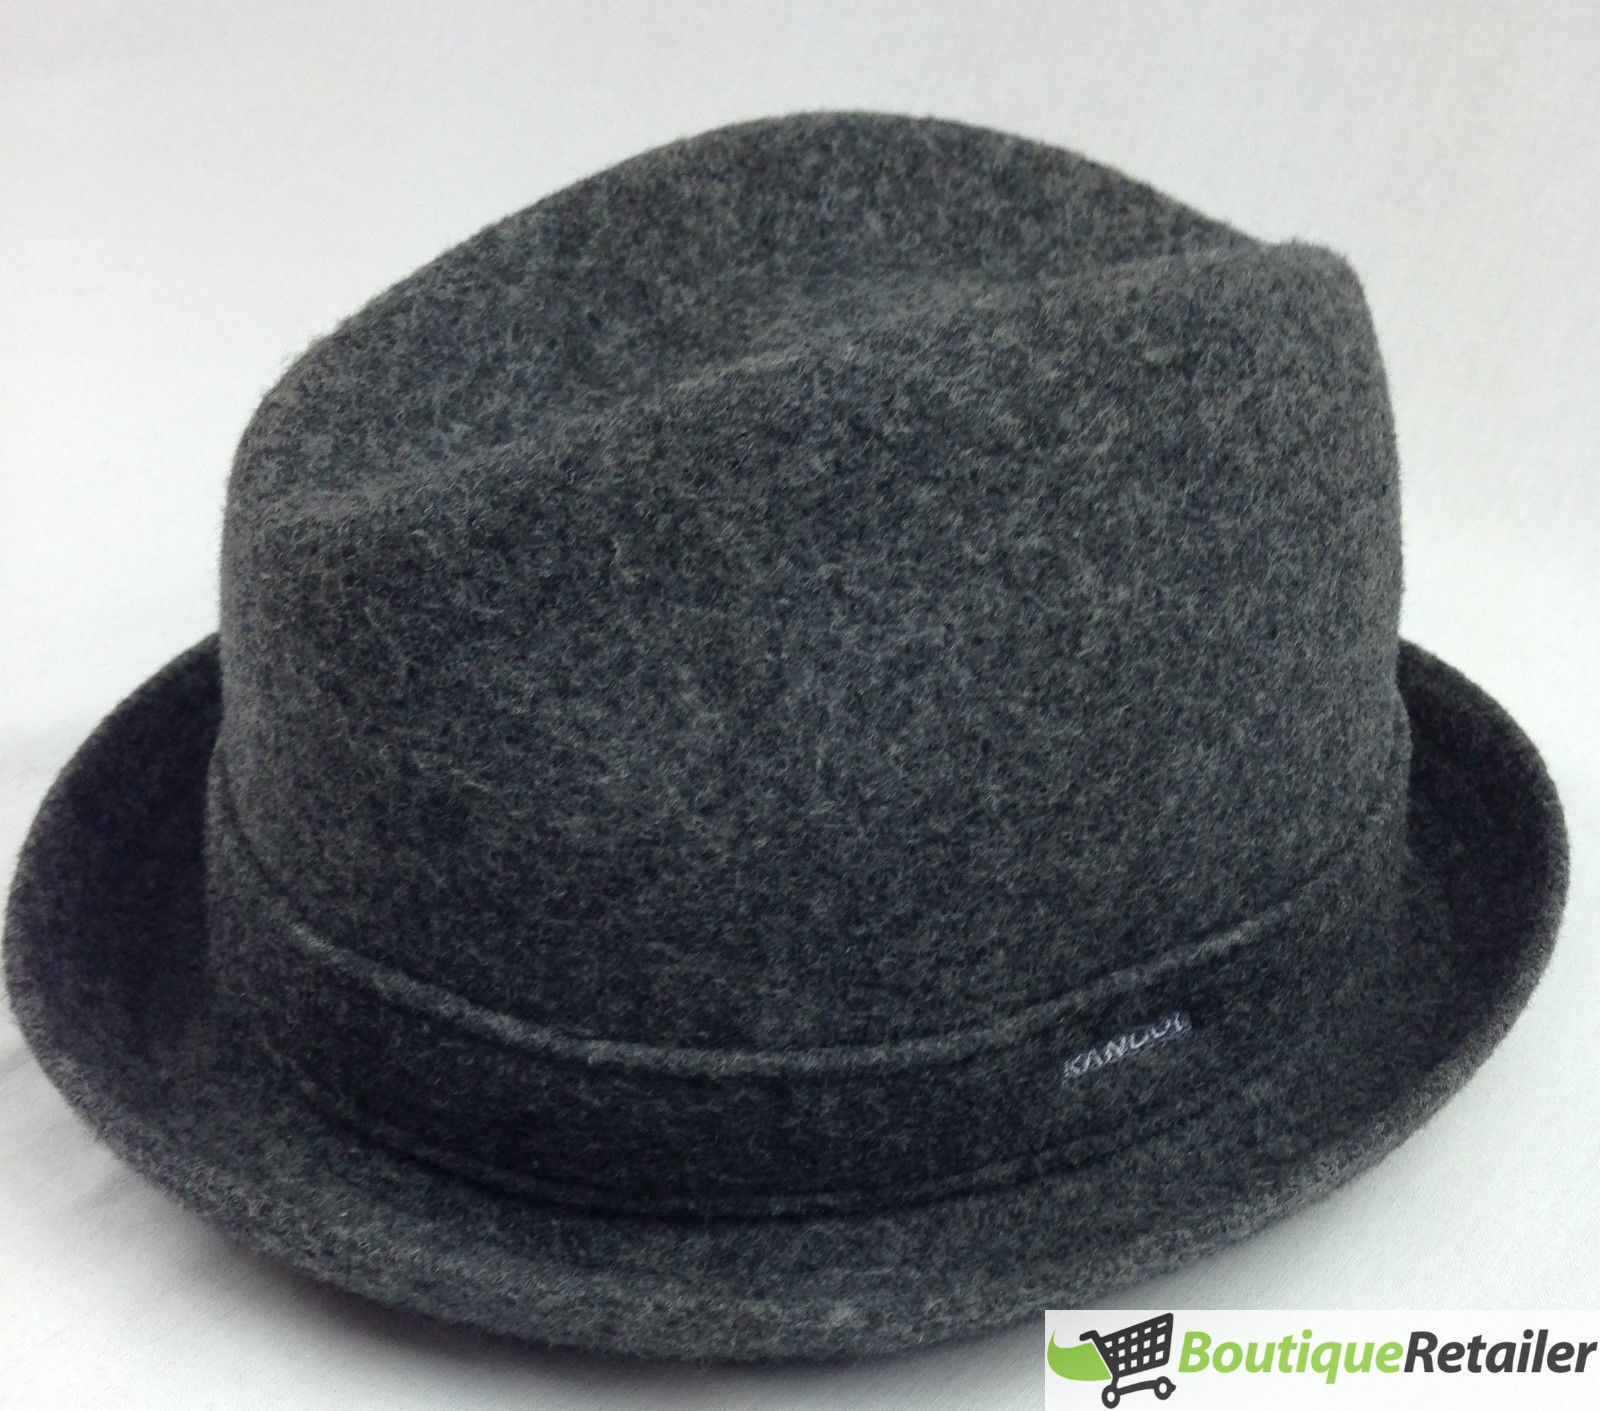 KANGOL Wool Player Trilby Hat 6447BC Fedora Style Warm Winter Cap | eBay